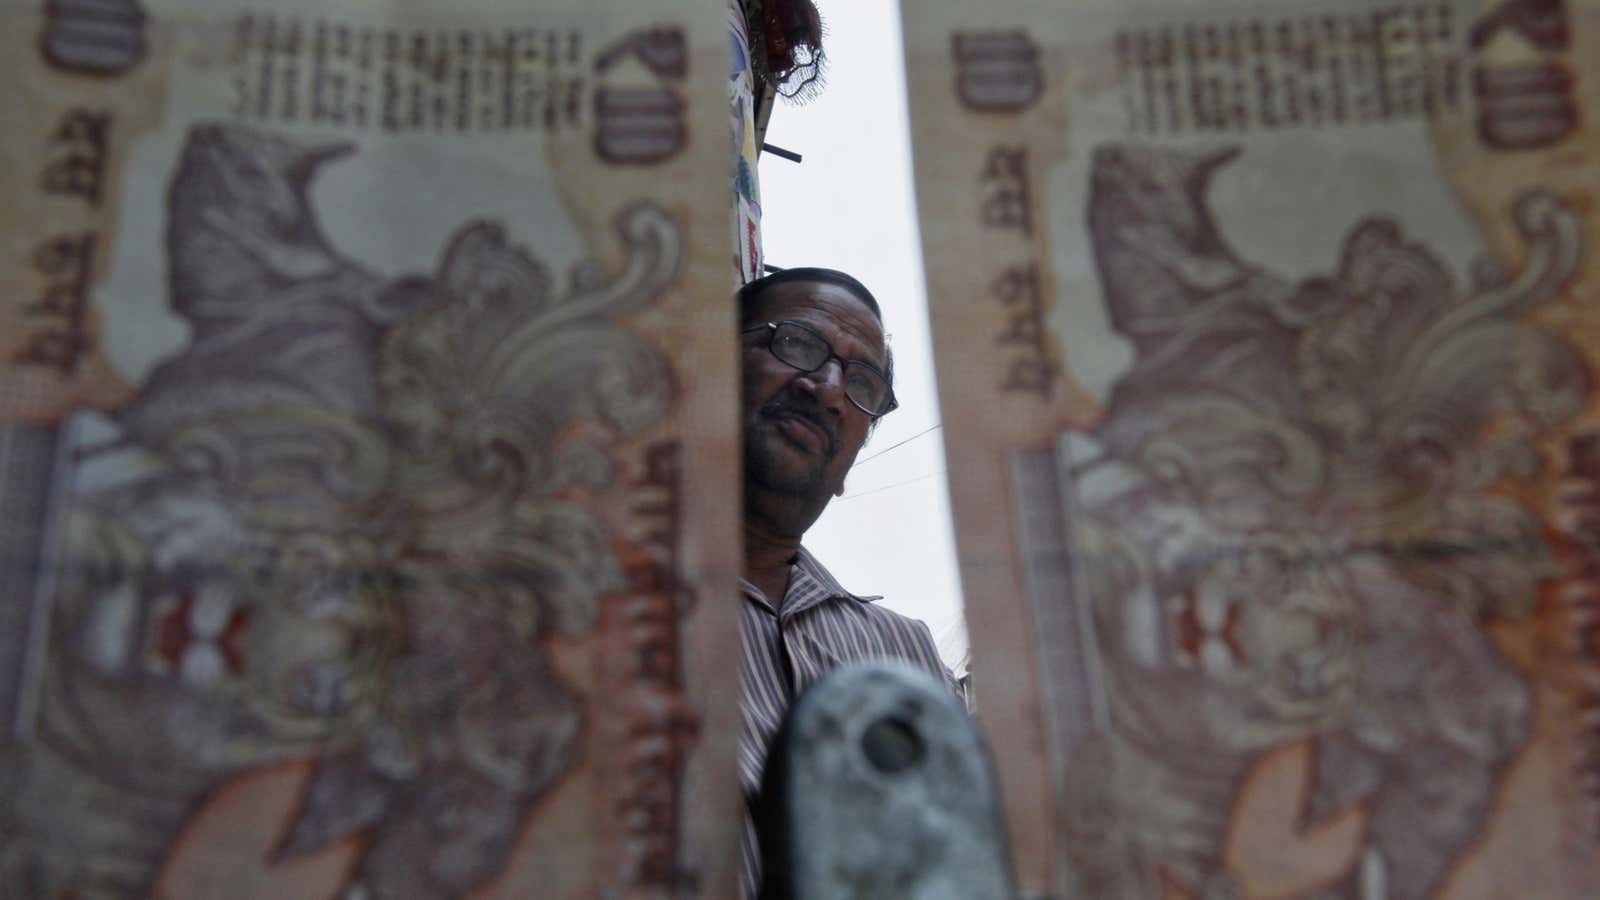 For money changers in Delhi, the weak rupee looms large.